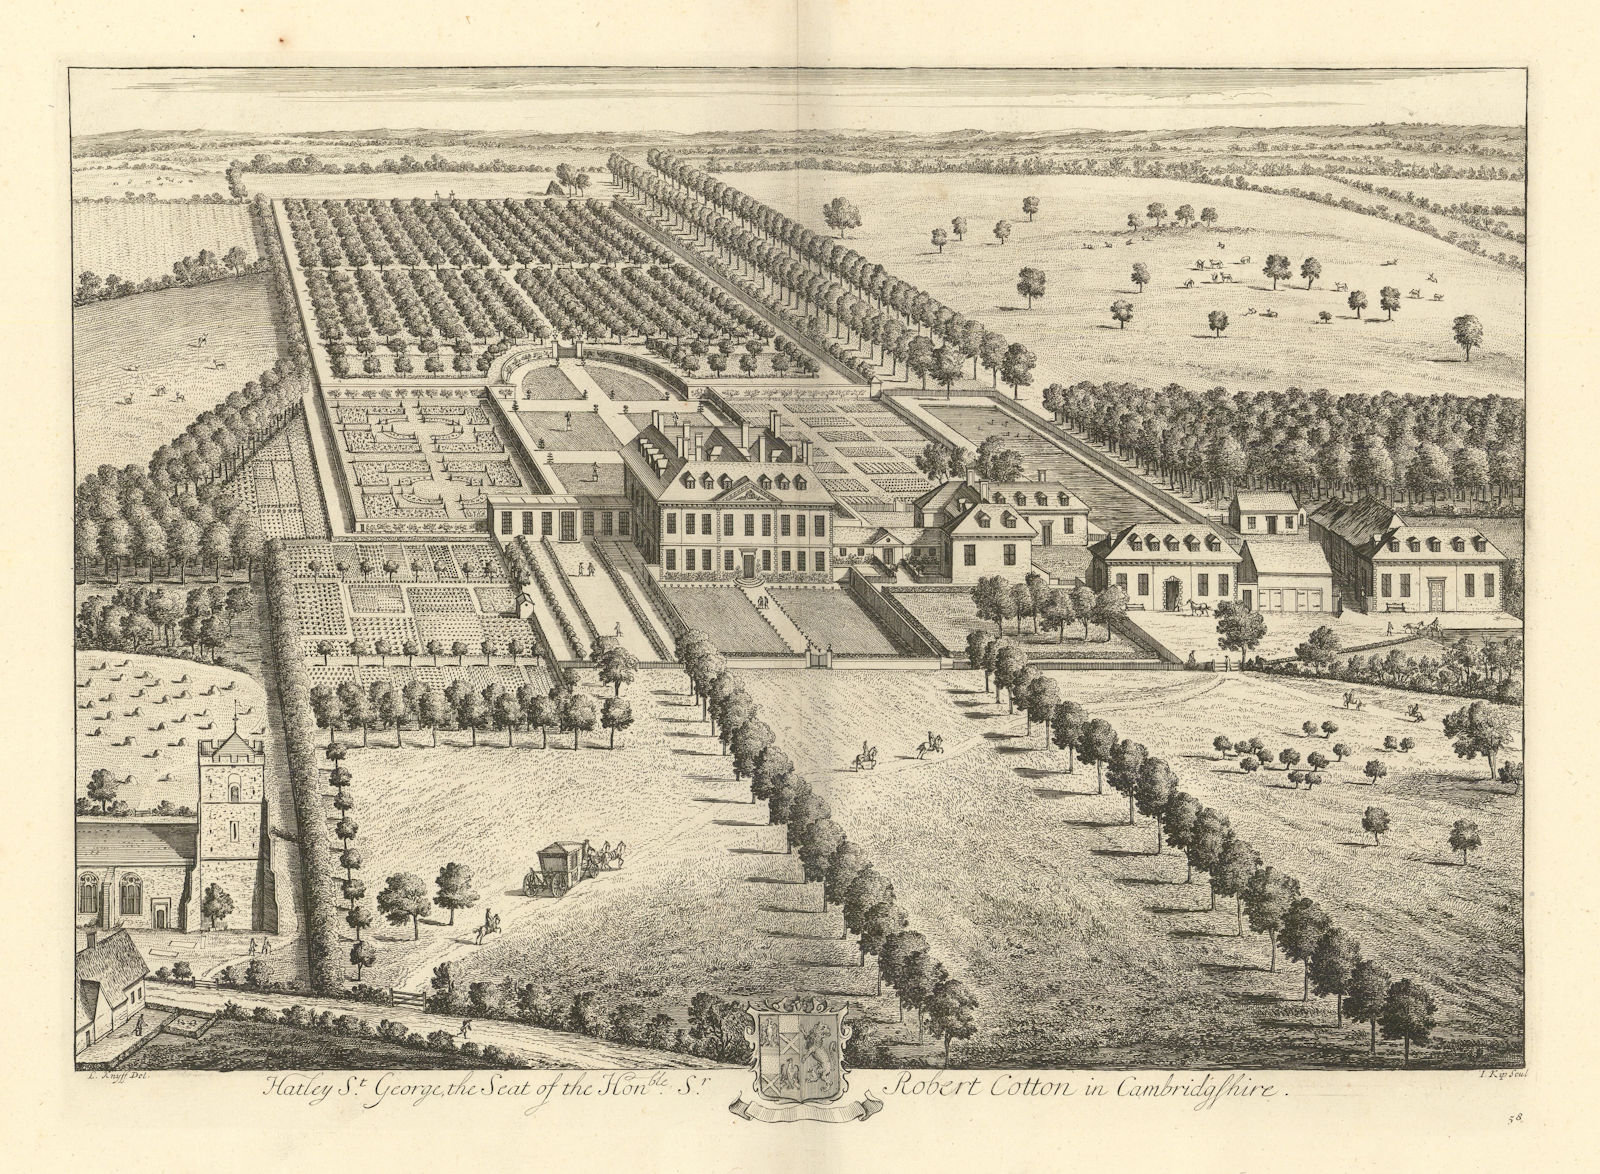 Associate Product Hatley Park, Hatley St George, Cambridgeshire by Kip & Knyff. Robert Cotton 1709